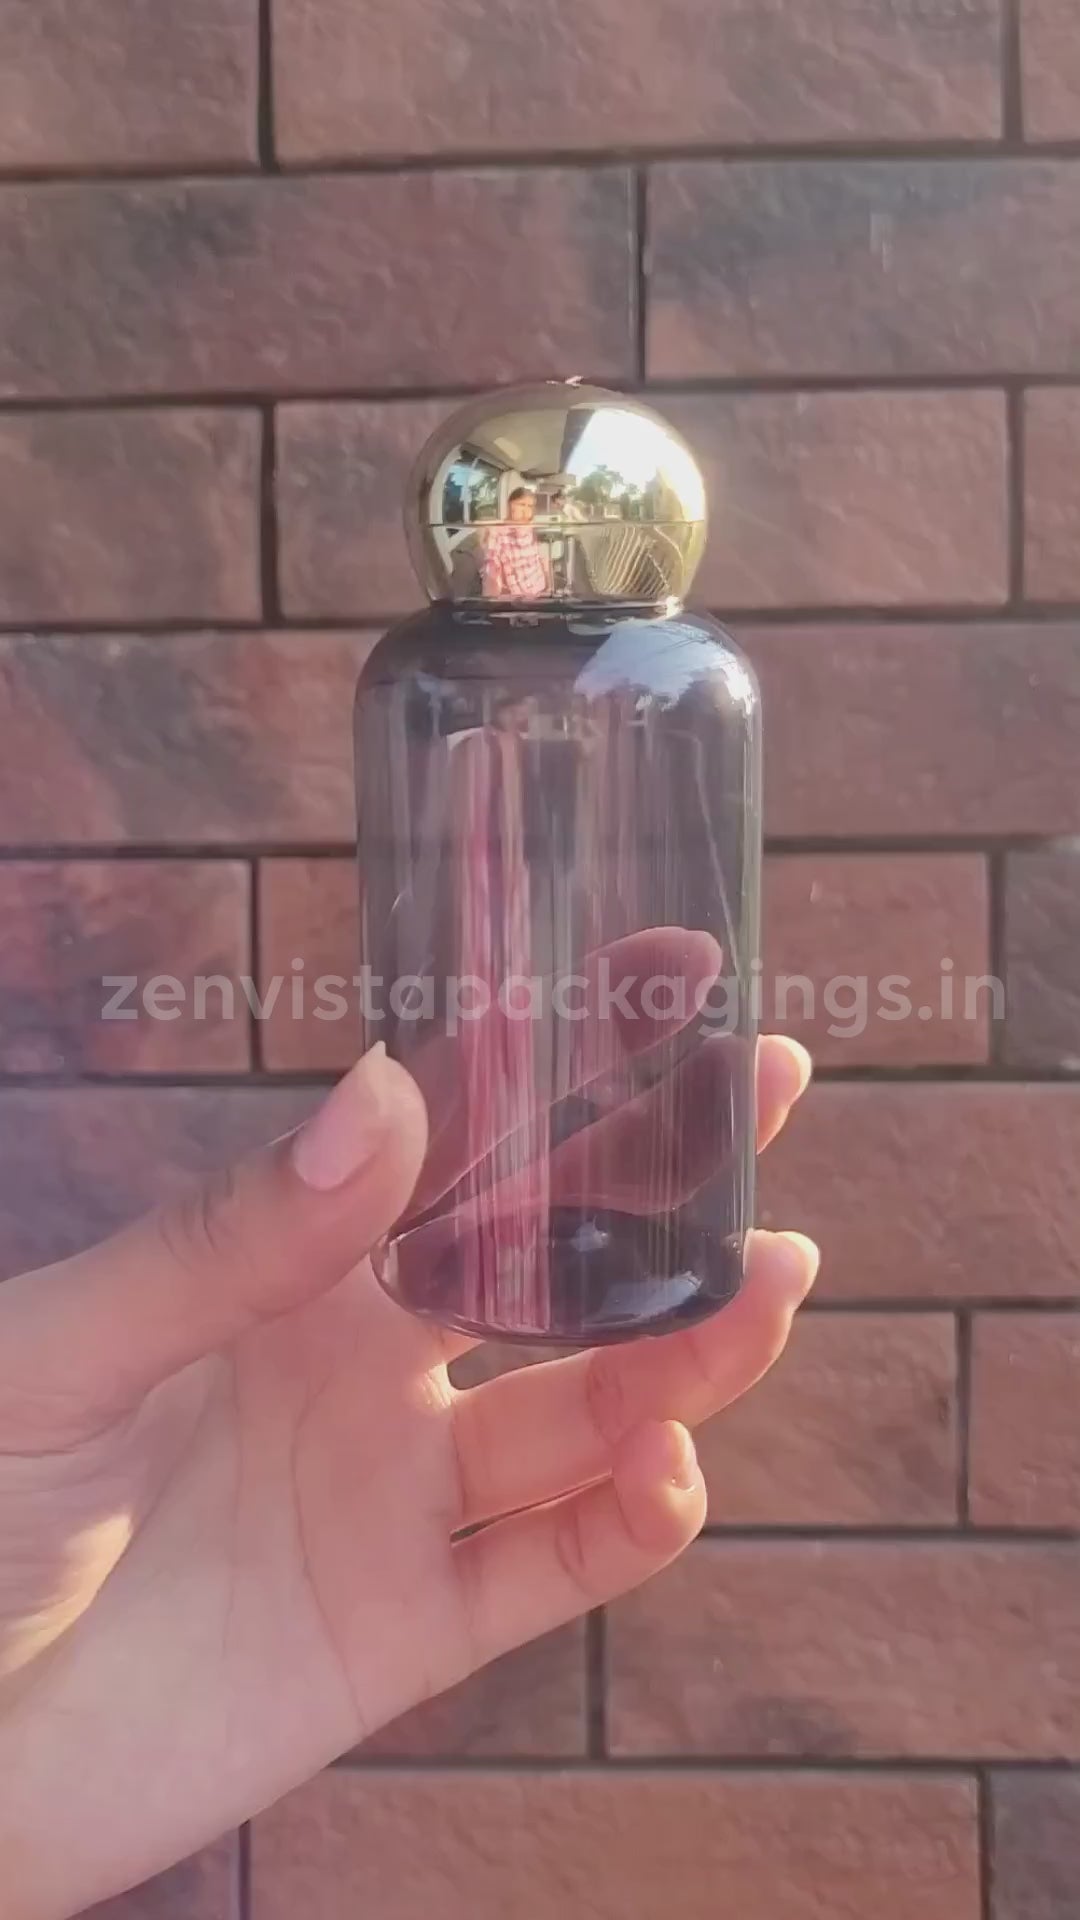 Transparent Black Color Pet Bottle With Gold Plated Dome Cap 100ml [ZMT110]